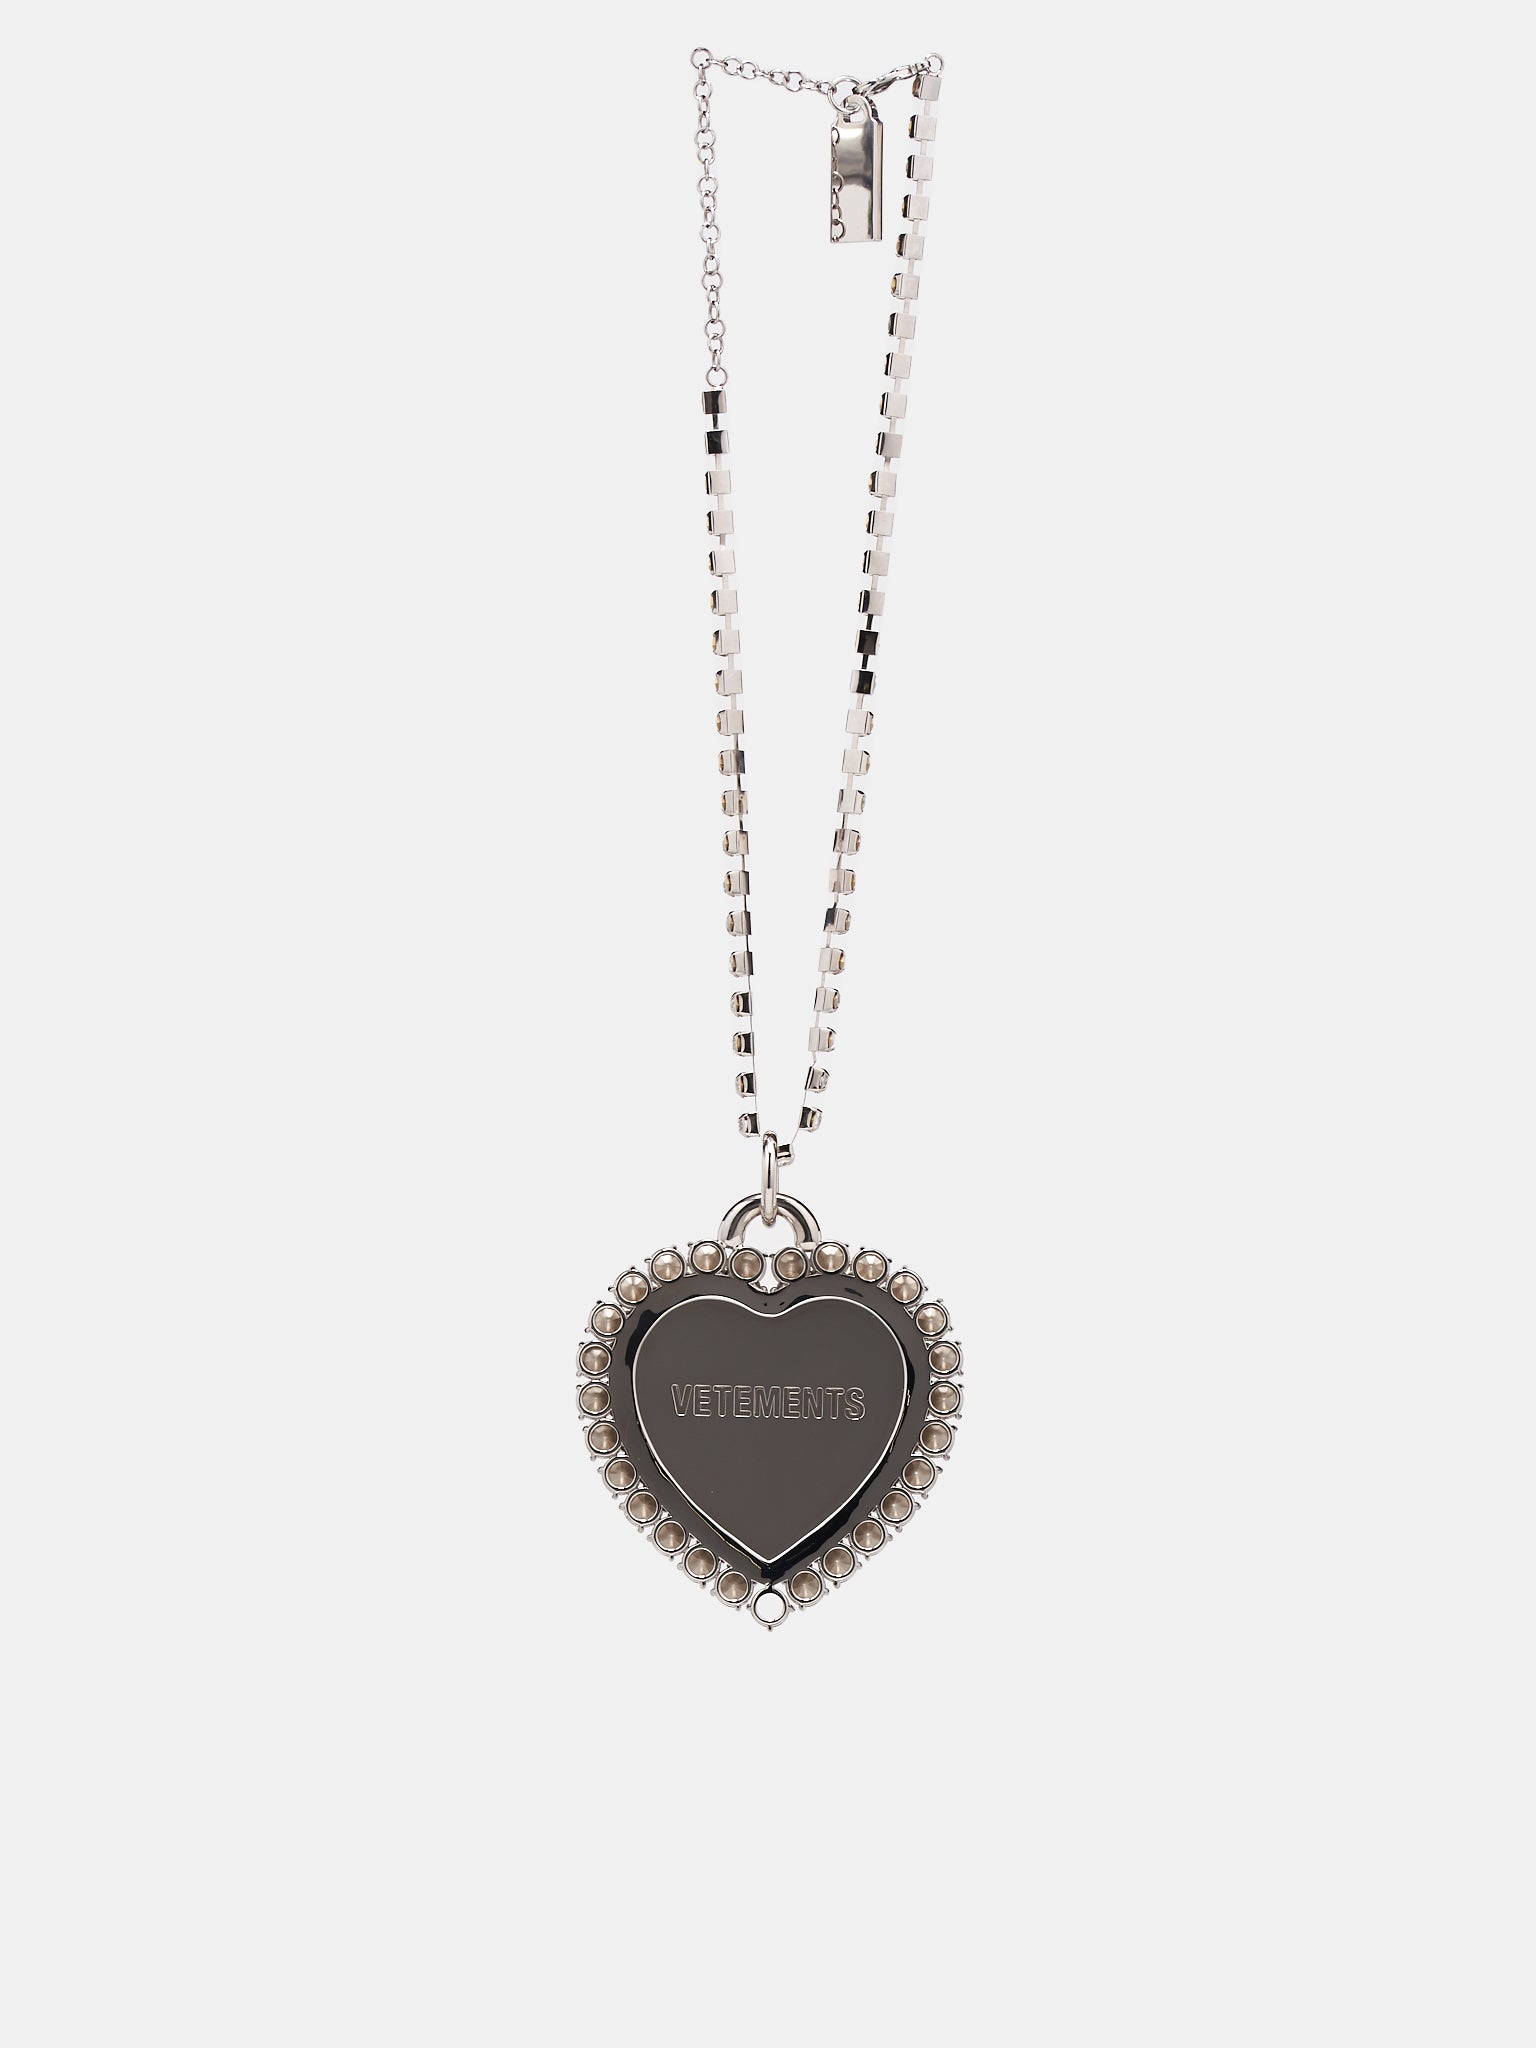 Giant Crystal Heart Necklace (UE64NE100W-CRYSTAL)